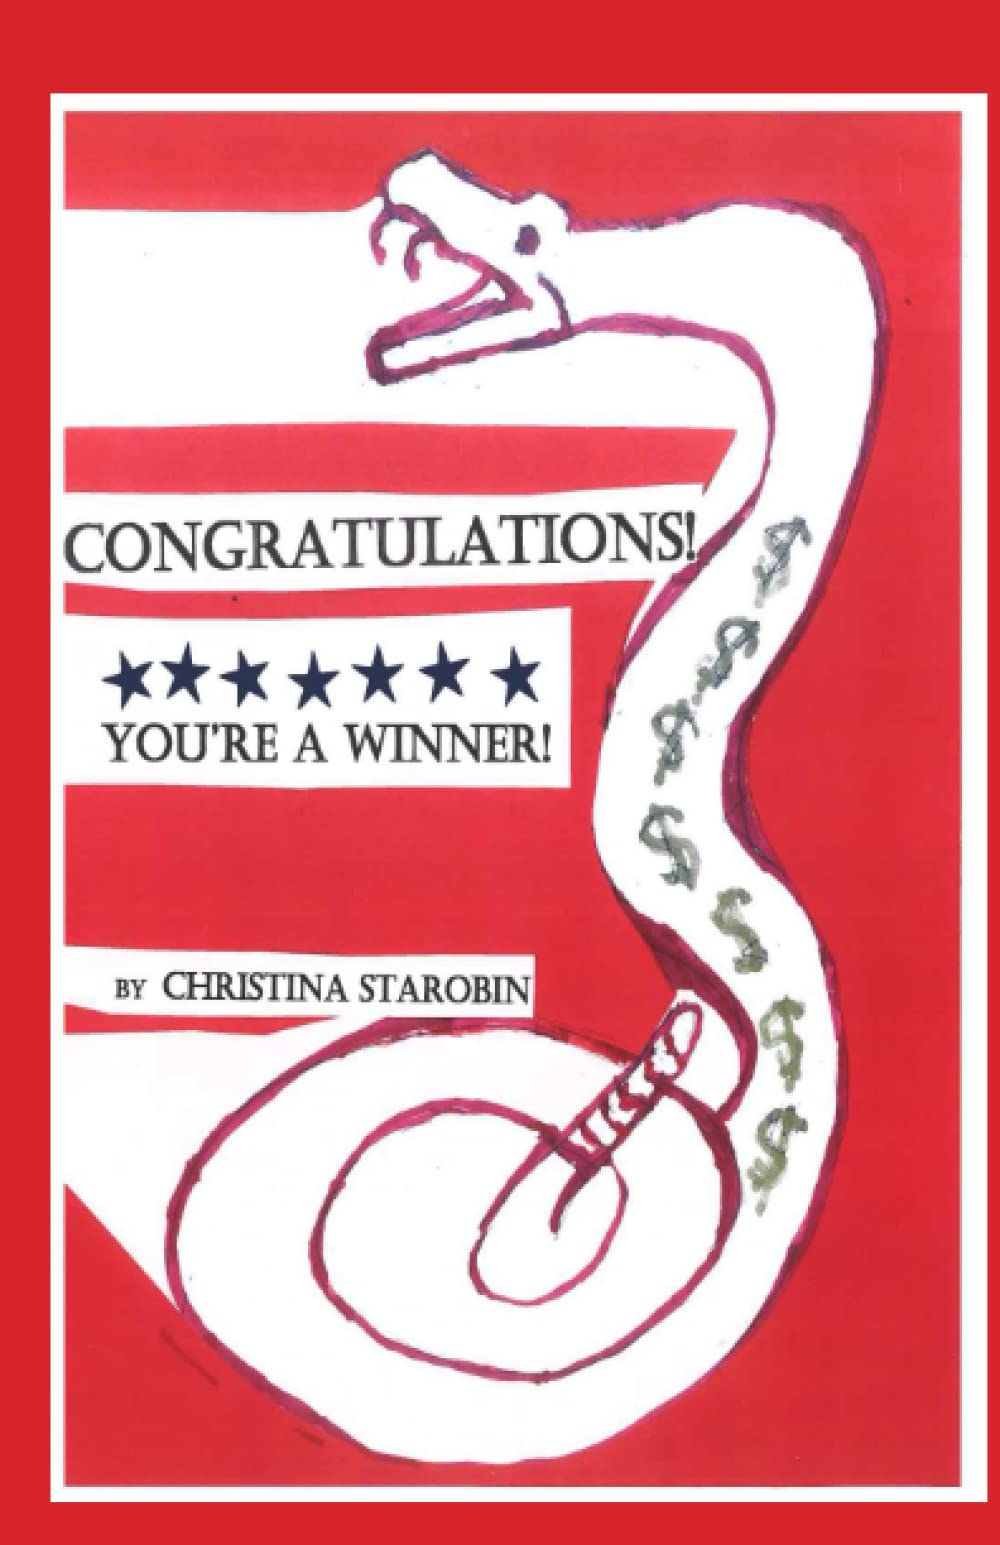 Congratulations You’re a Winner  by Christina Starobin